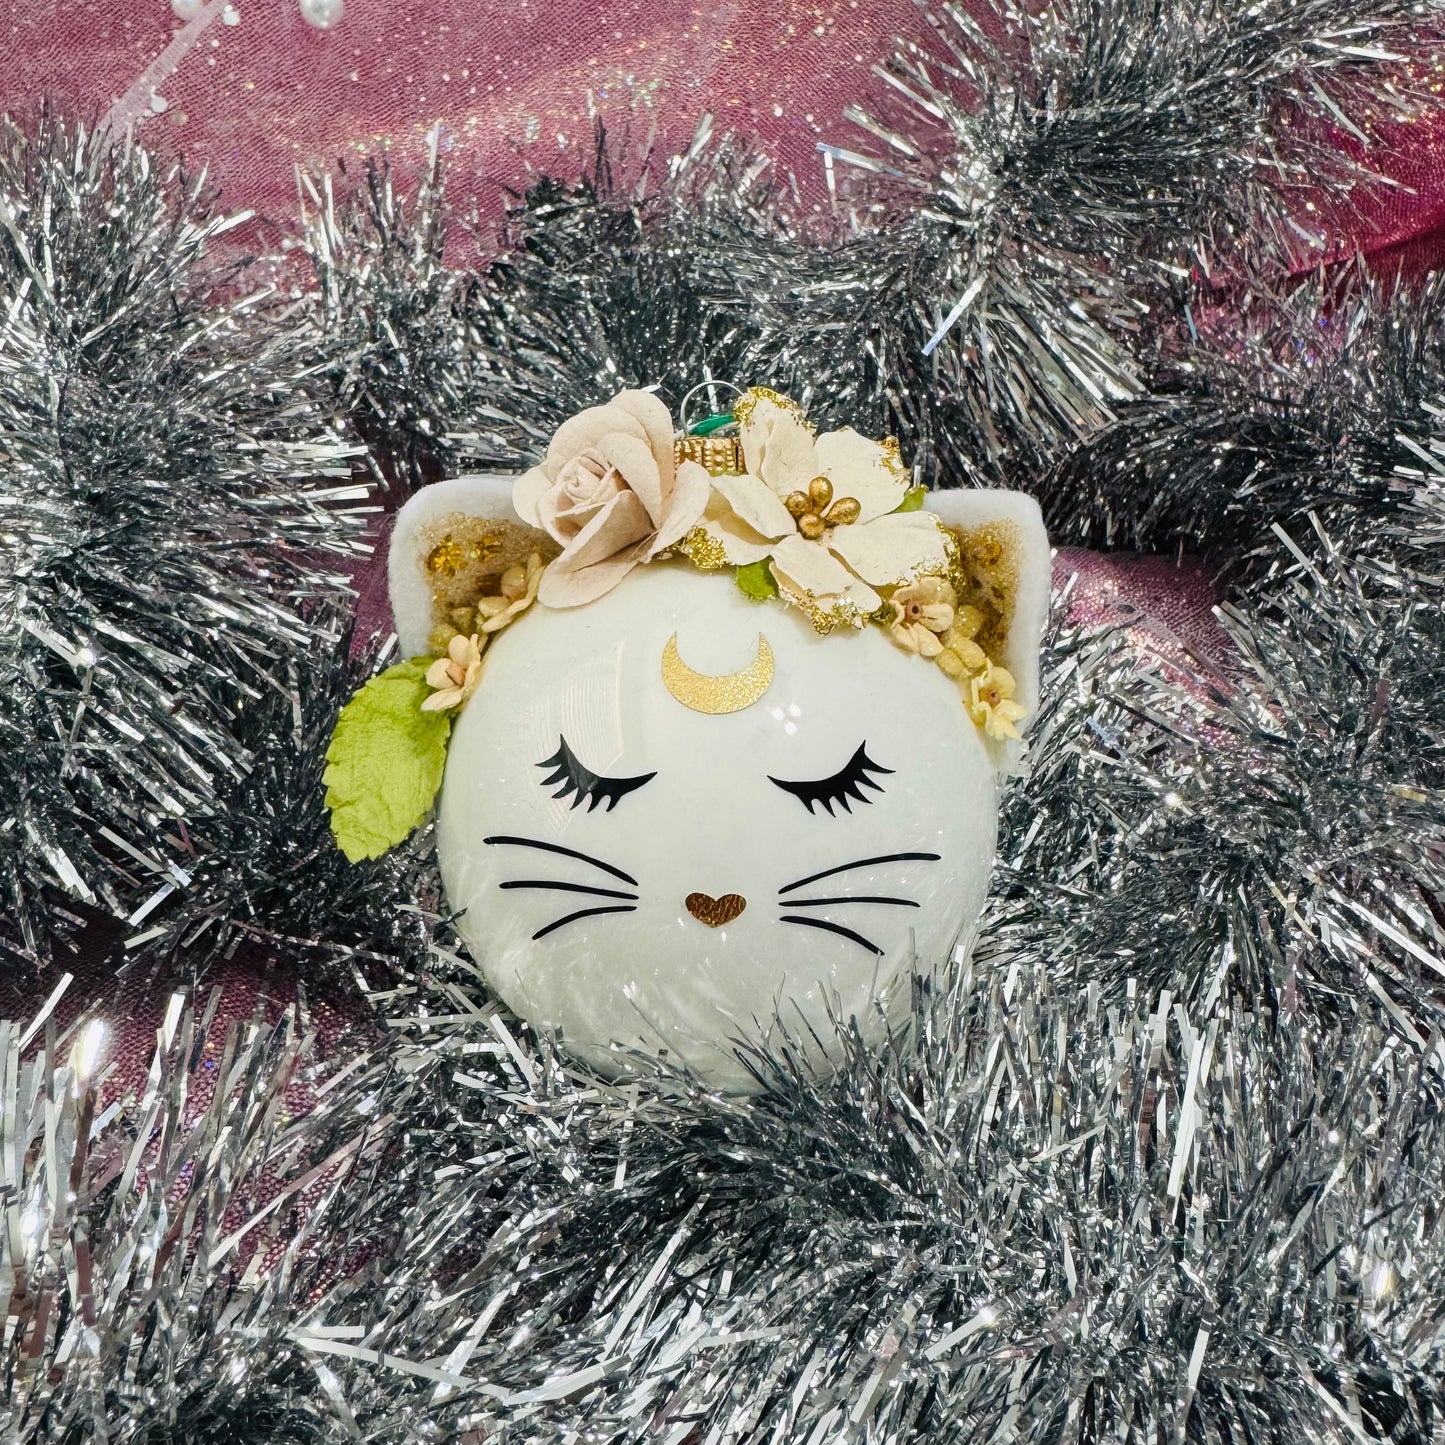 Moon Kitty Ornaments